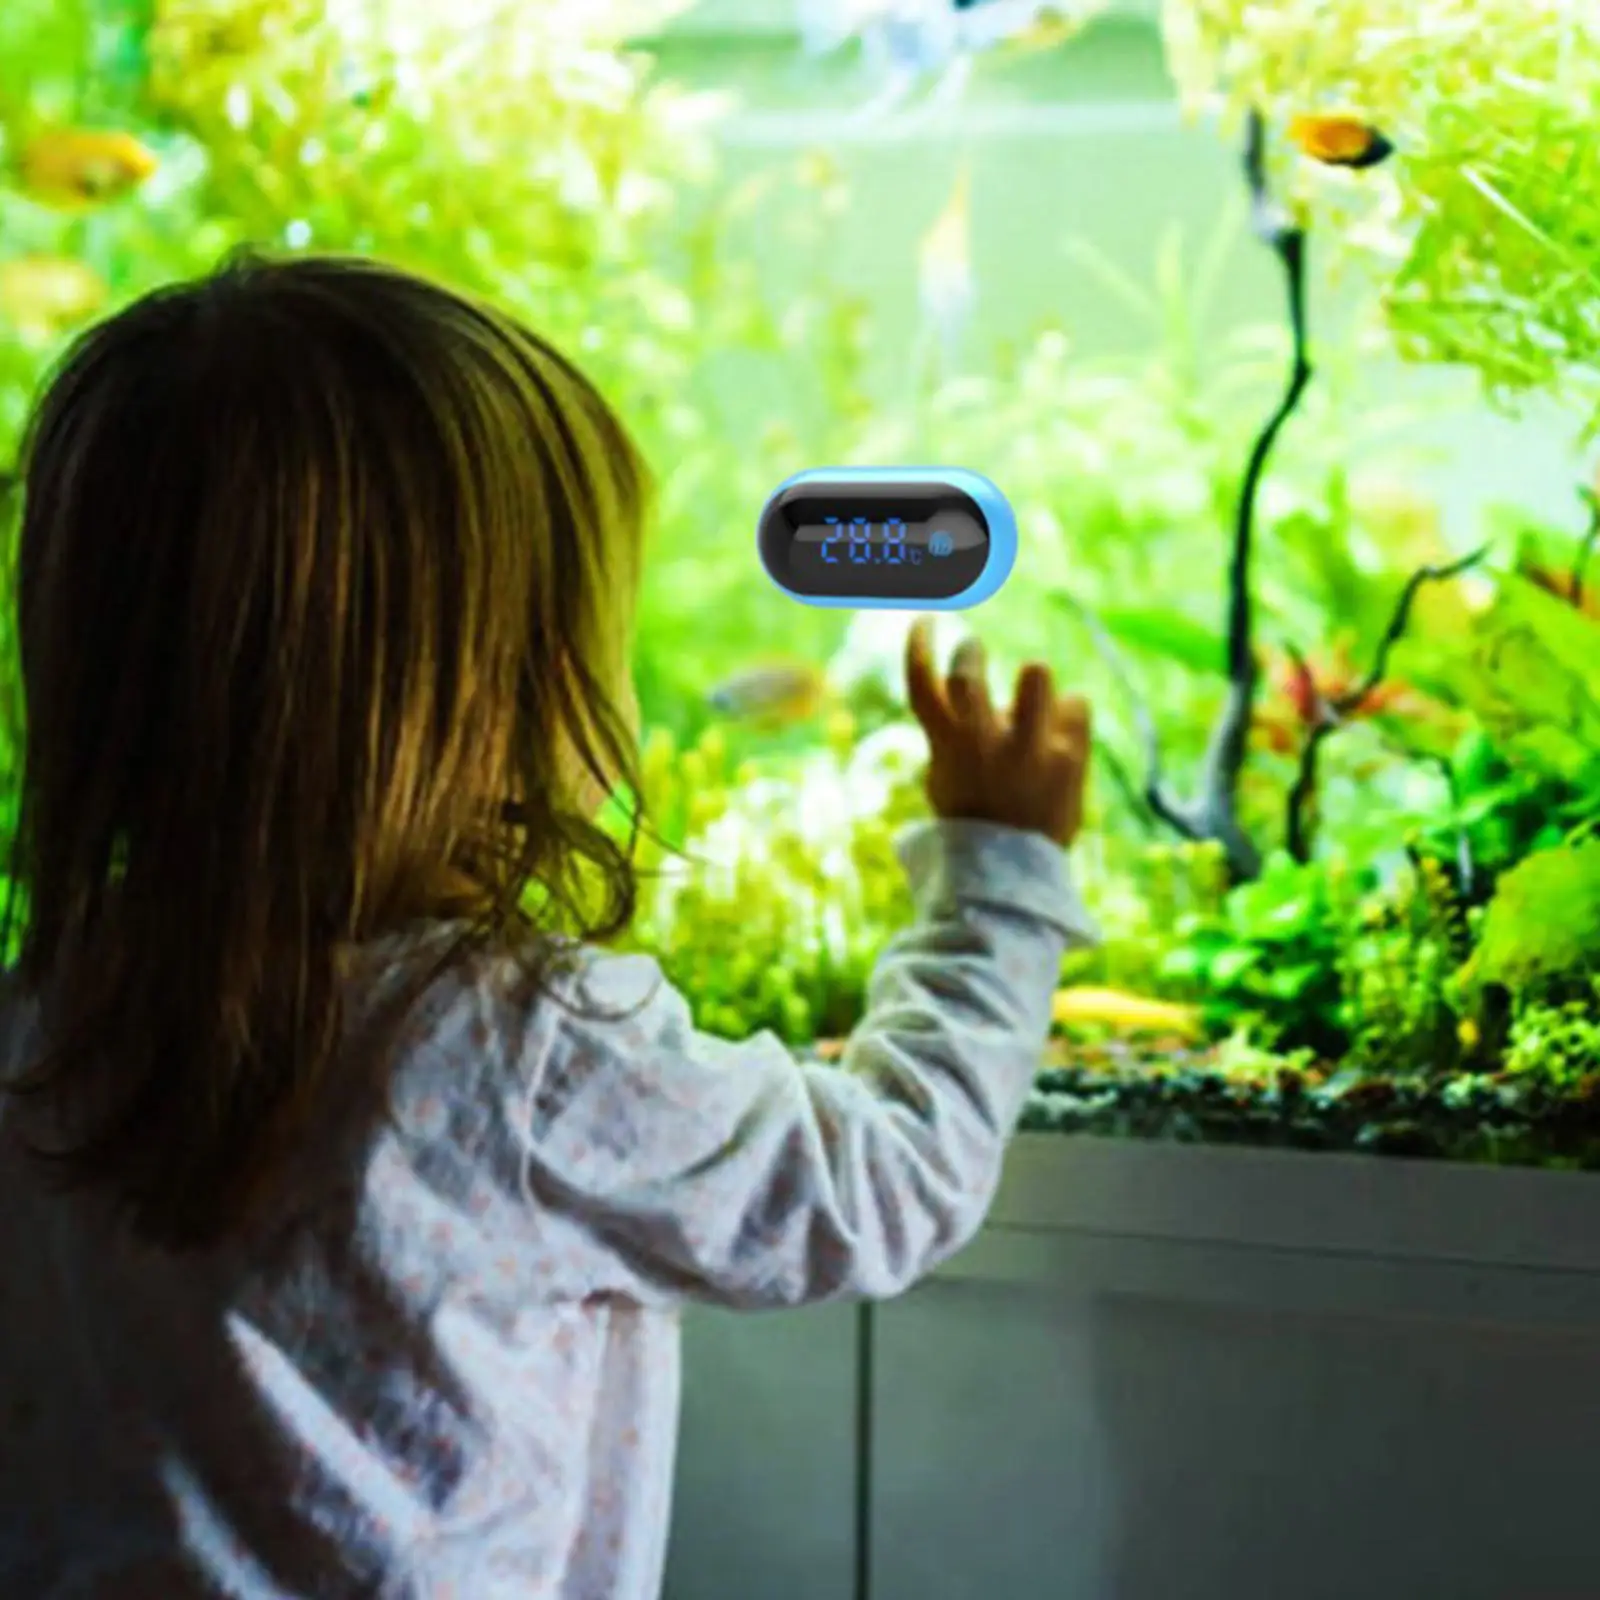 Aquarium Thermometer LED Digital Thermometer Fish Tank Water Temperature Thermometer for Fish Tank Aquarium